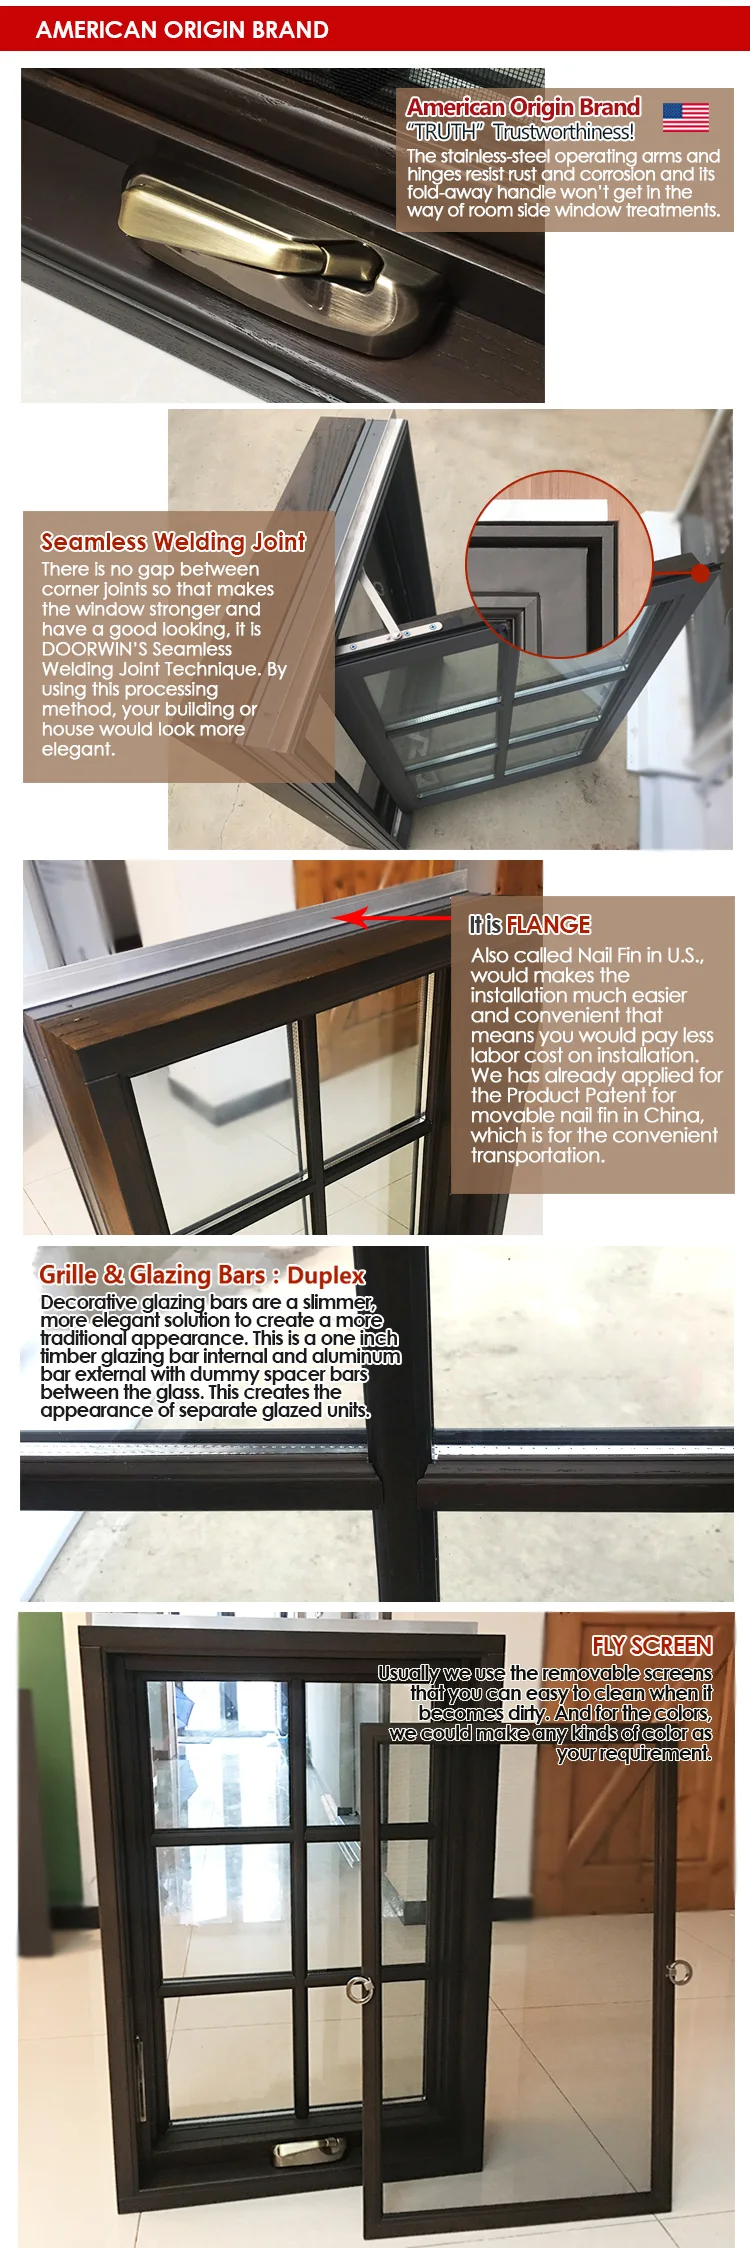 high quality customrizd American style  with grills design  Double Glazing  crank open casement windows